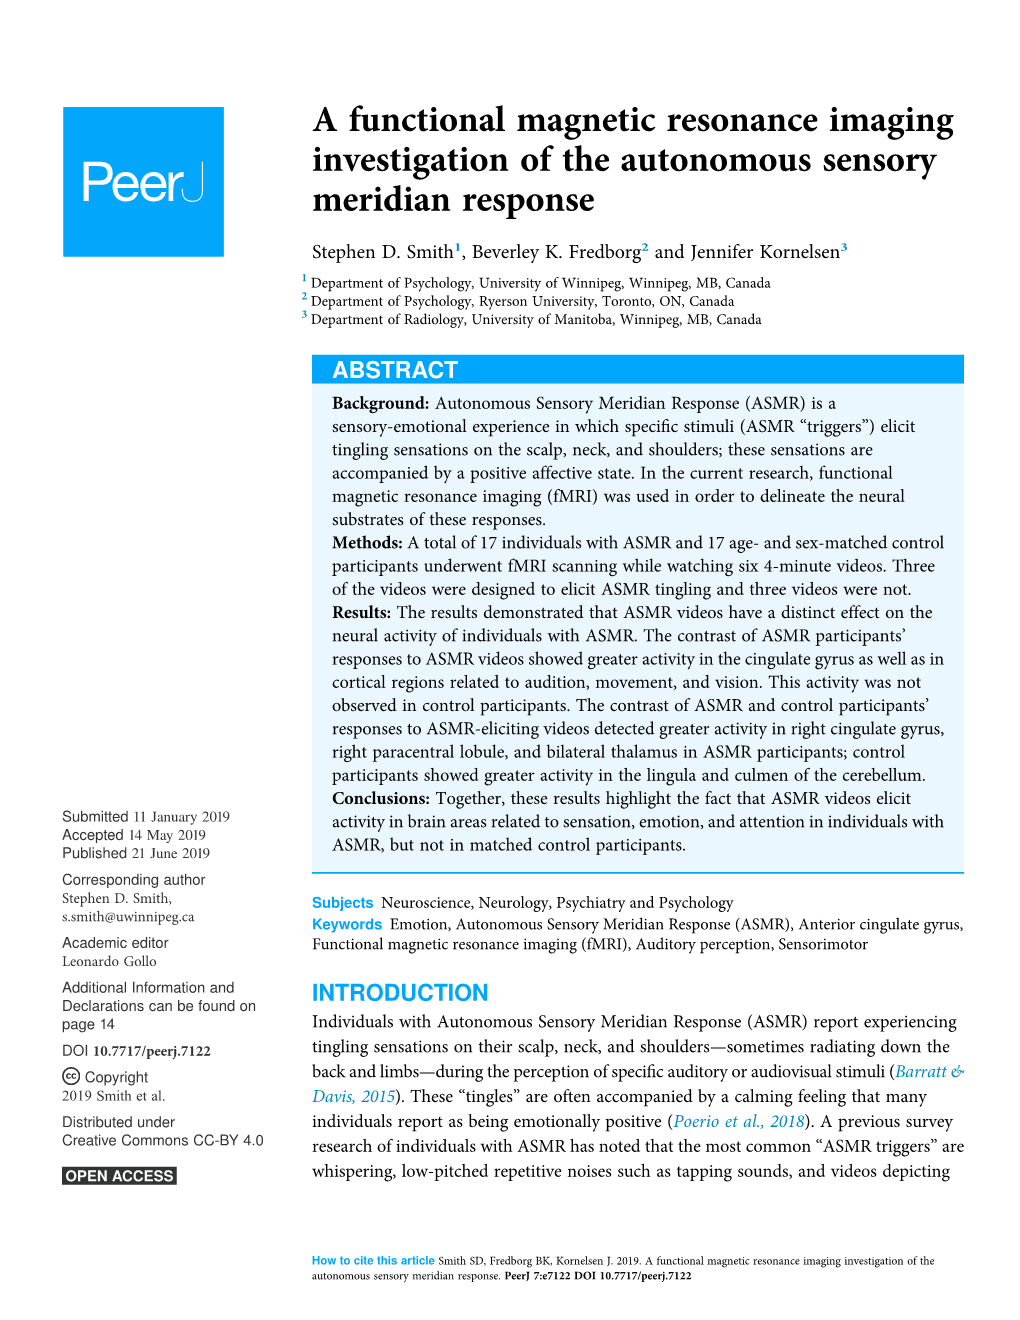 A Functional Magnetic Resonance Imaging Investigation of the Autonomous Sensory Meridian Response